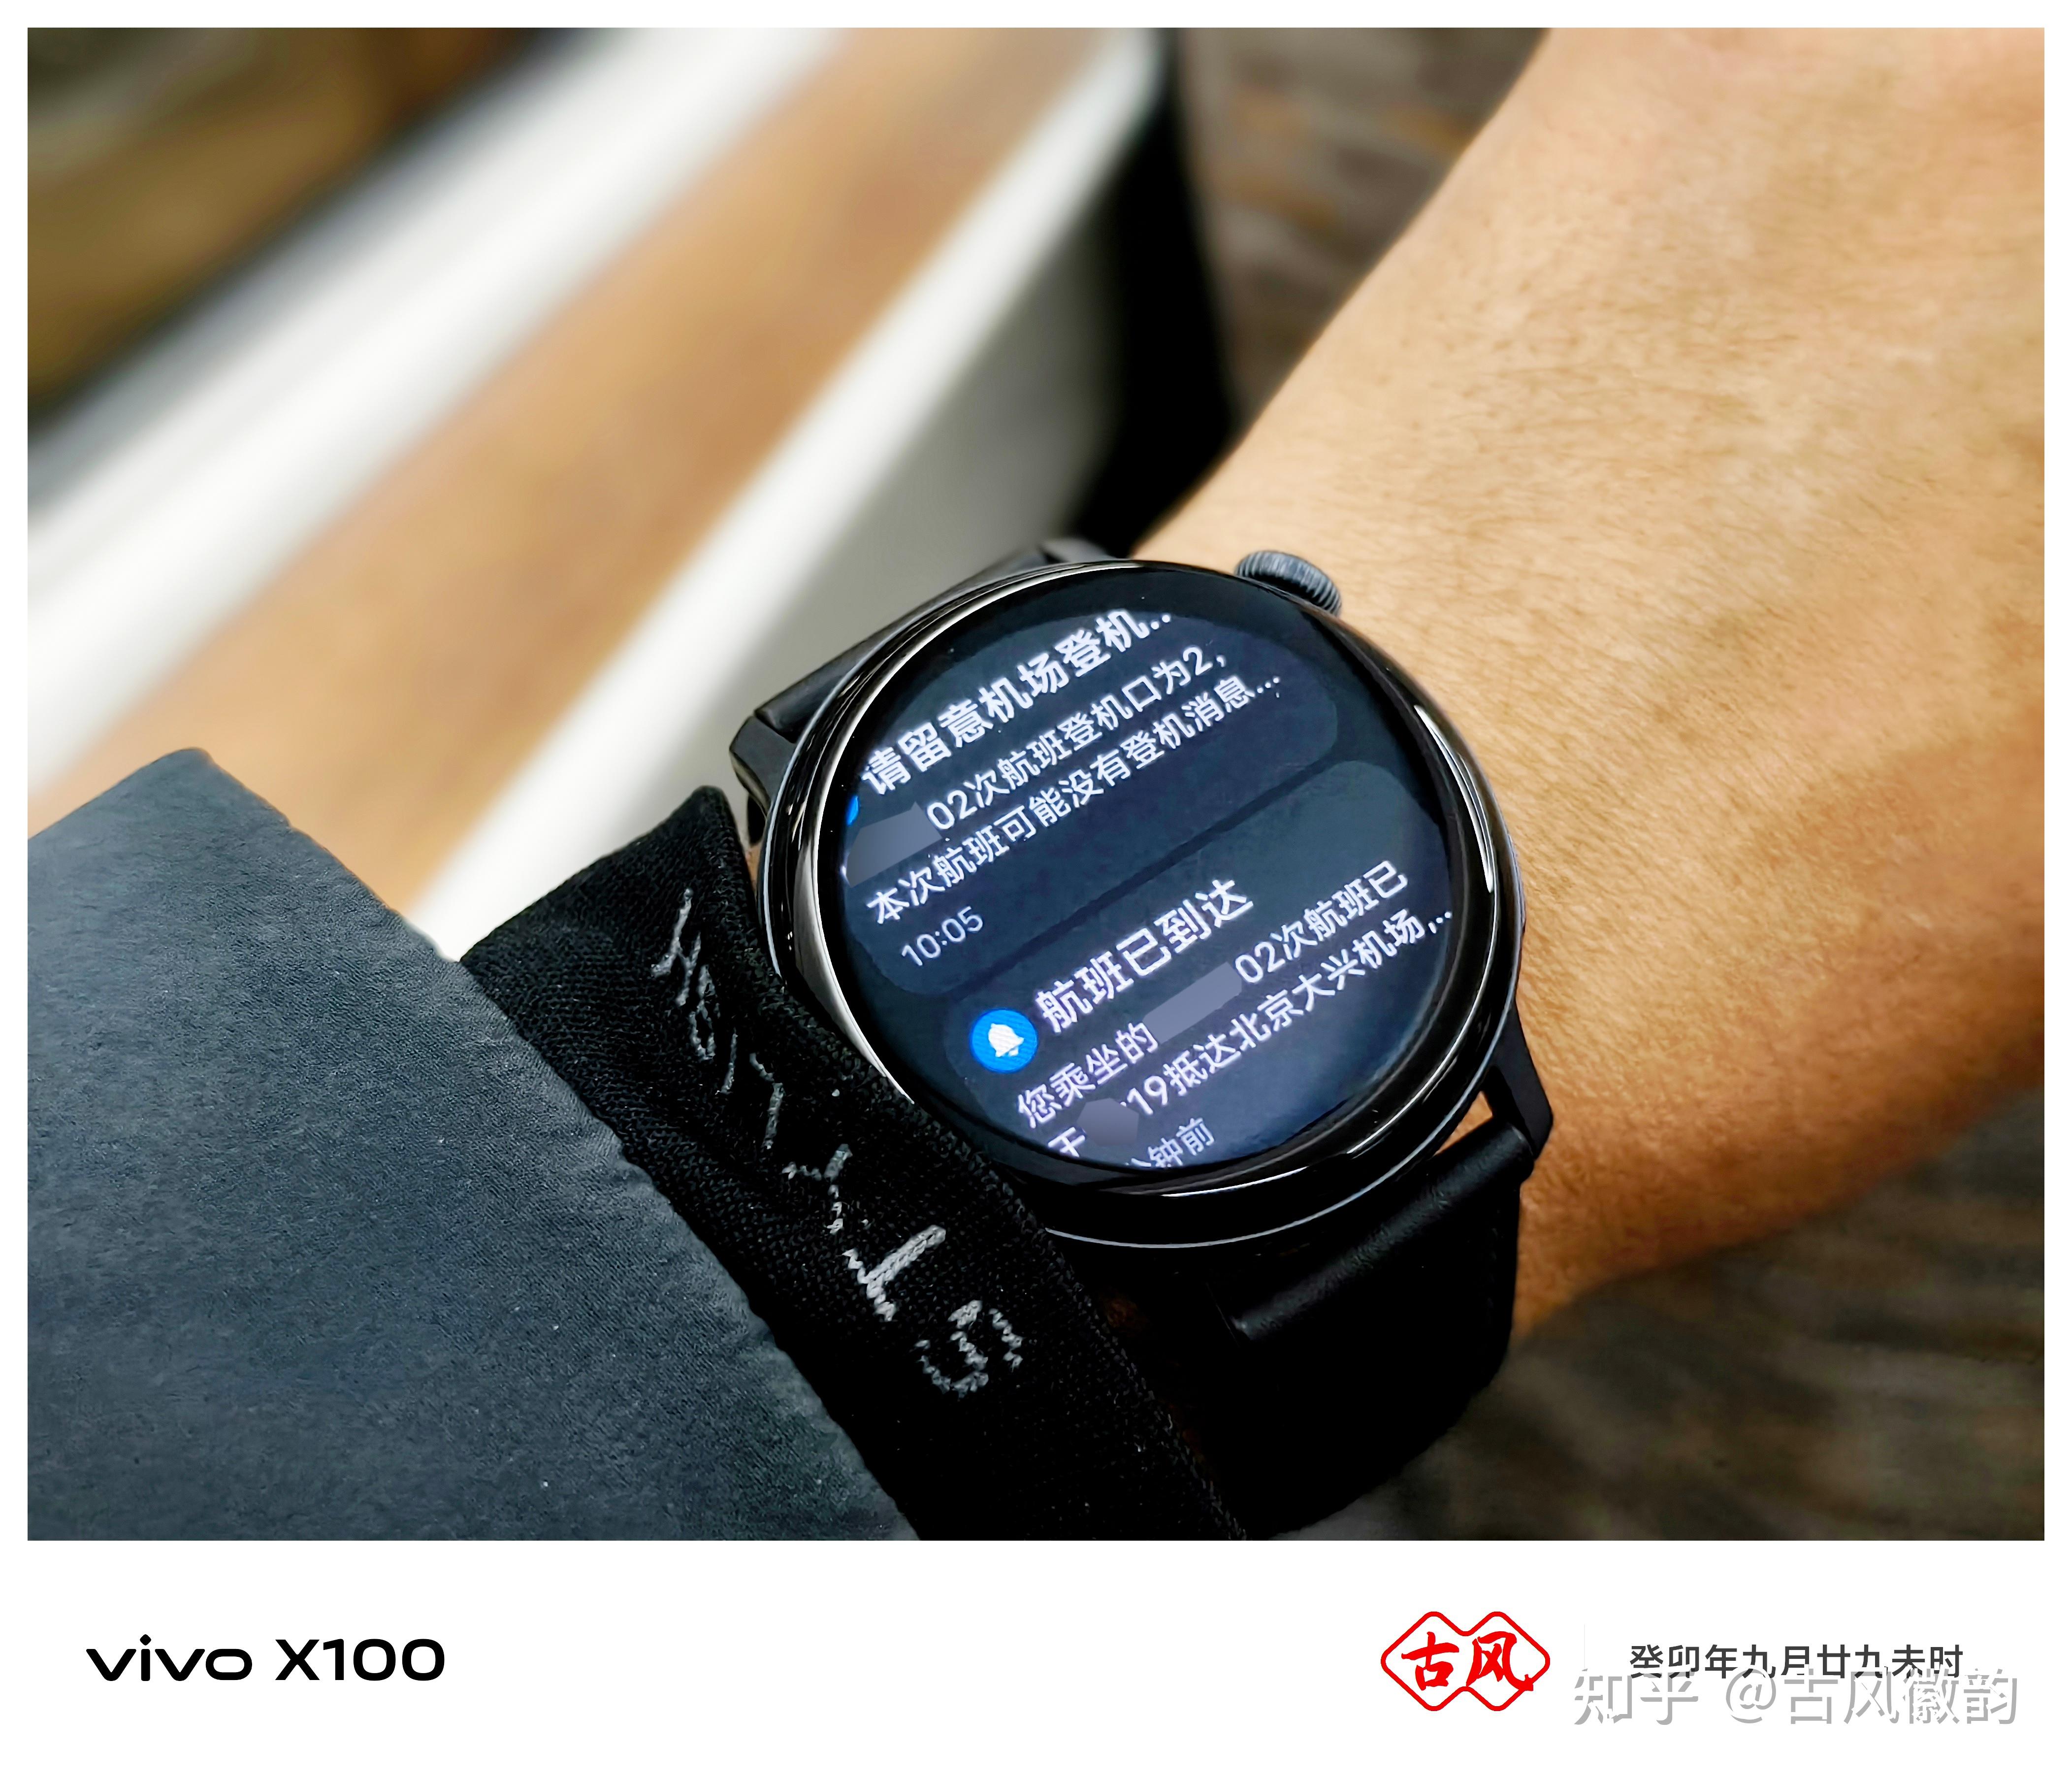 vivo watch3智能手表上手,全新蓝河系统,更强传感器,功能更丰富